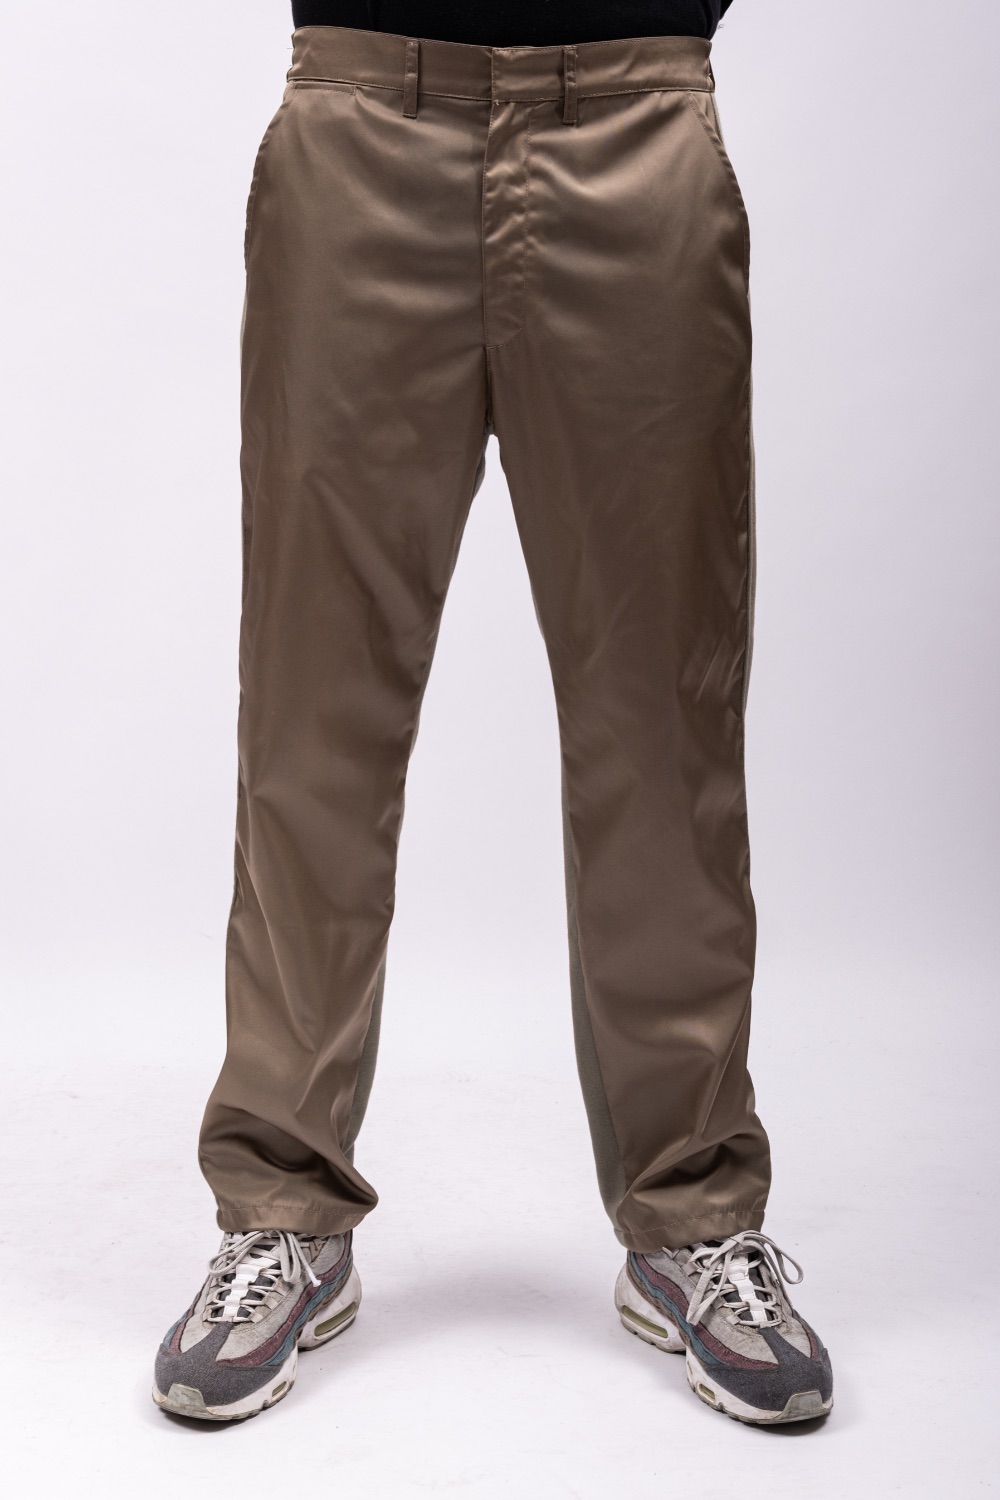 Pantalone Chino gris 2